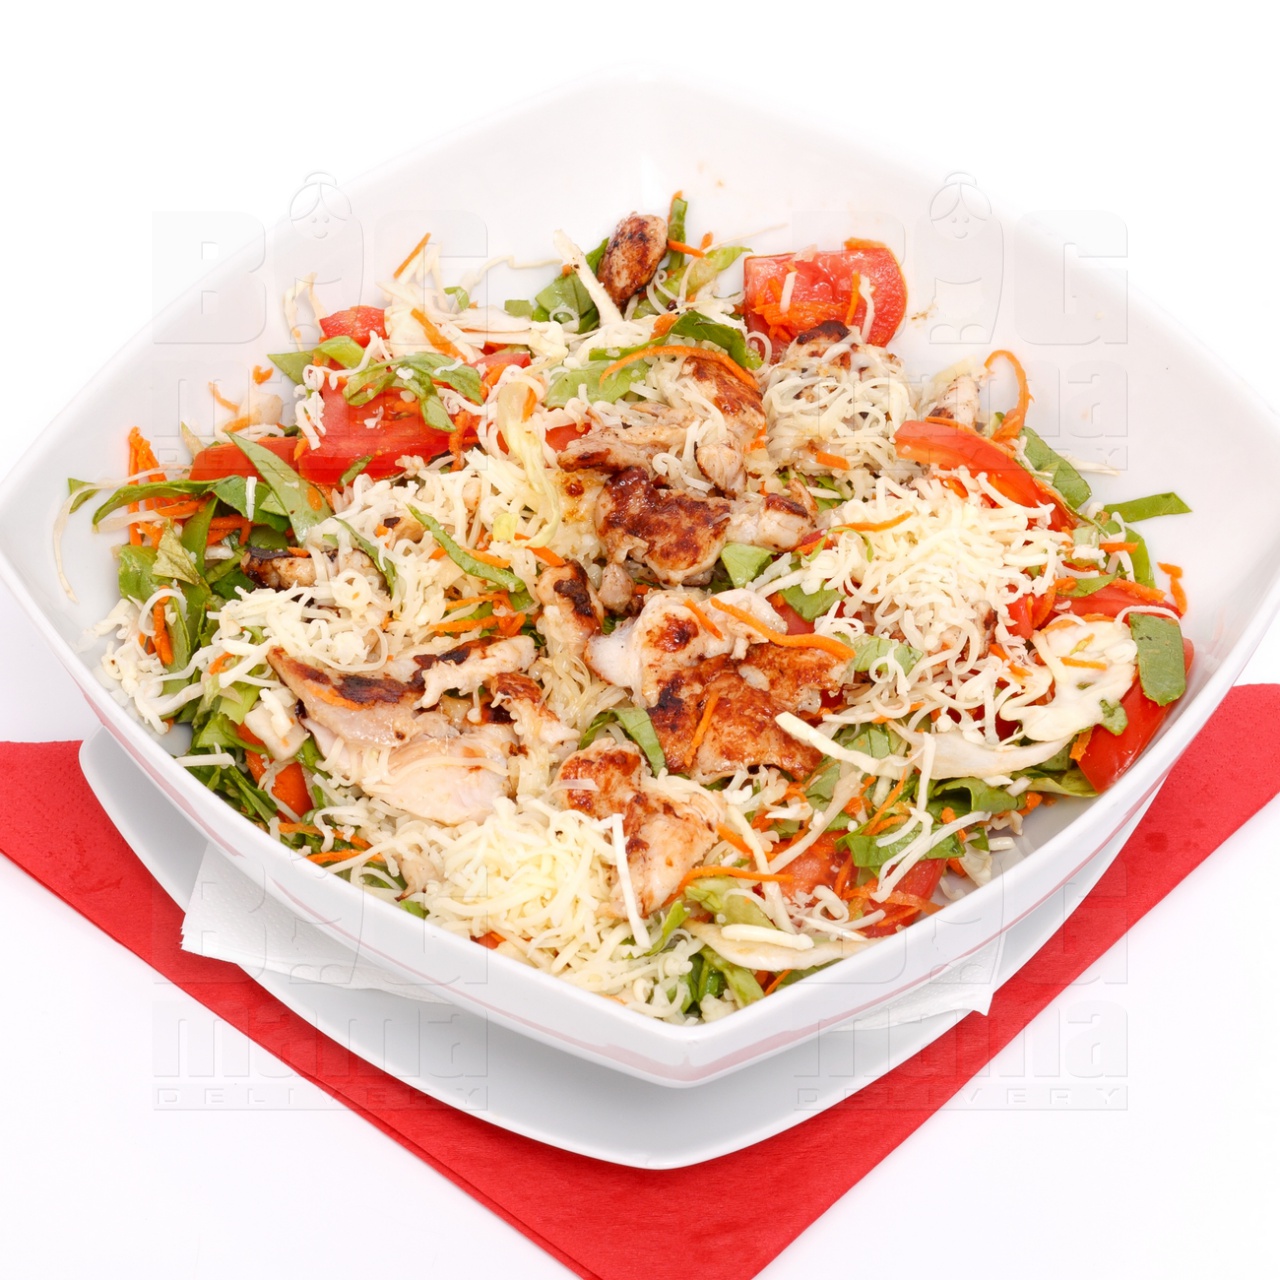 Product #169 image - Cezar salad, half portion